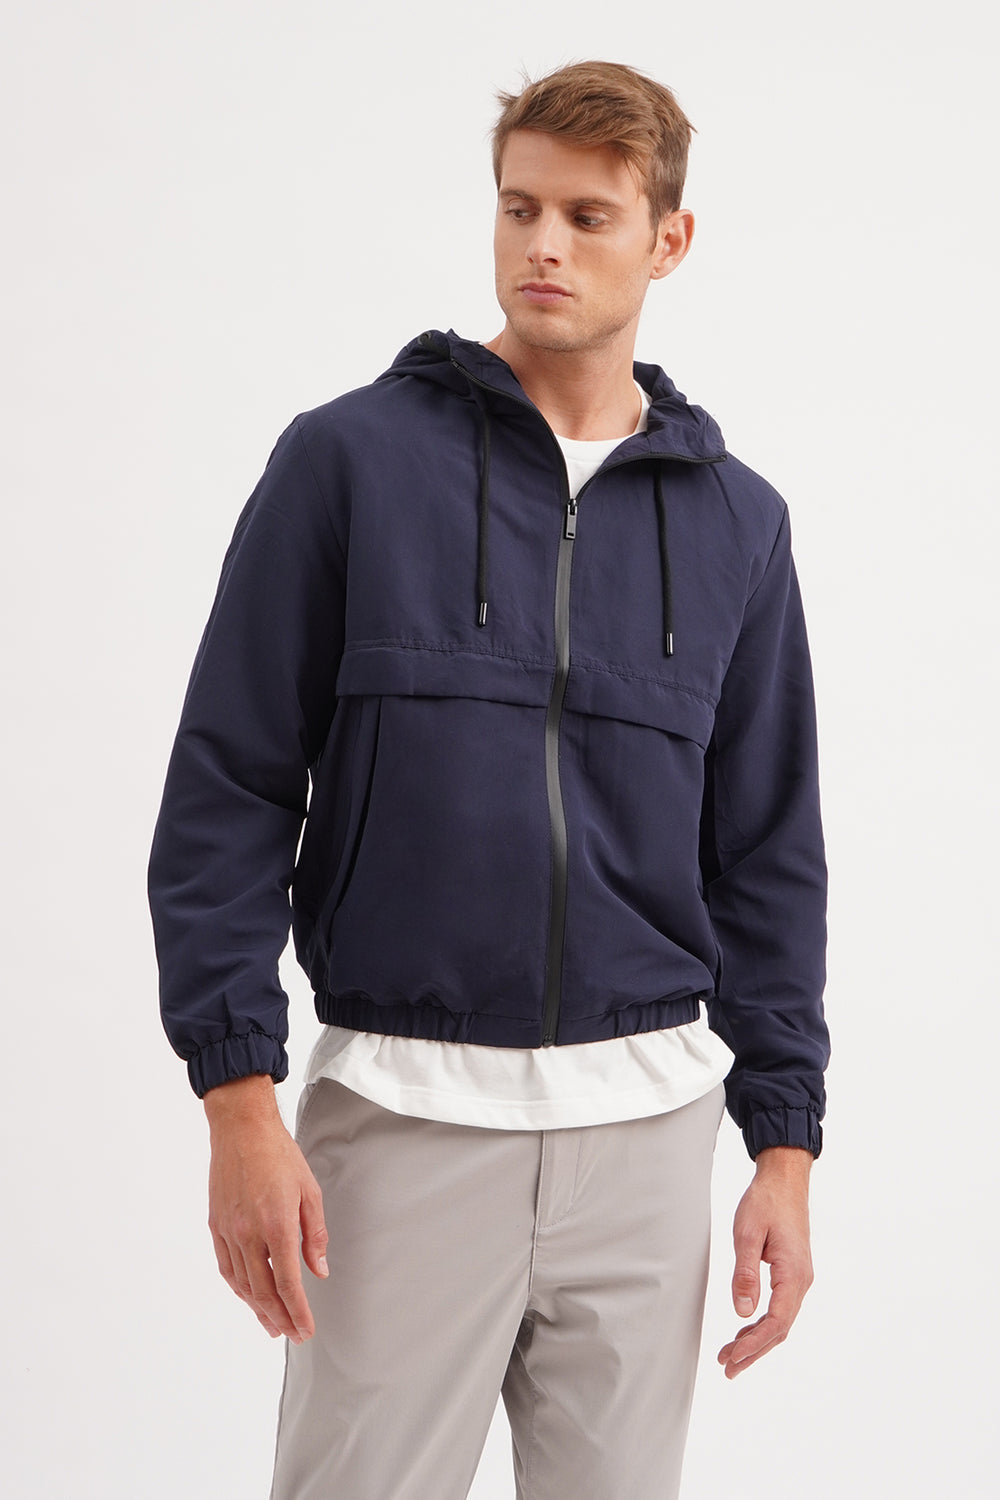 Shop Men's Jackets - Hoodies, Pullovers & More